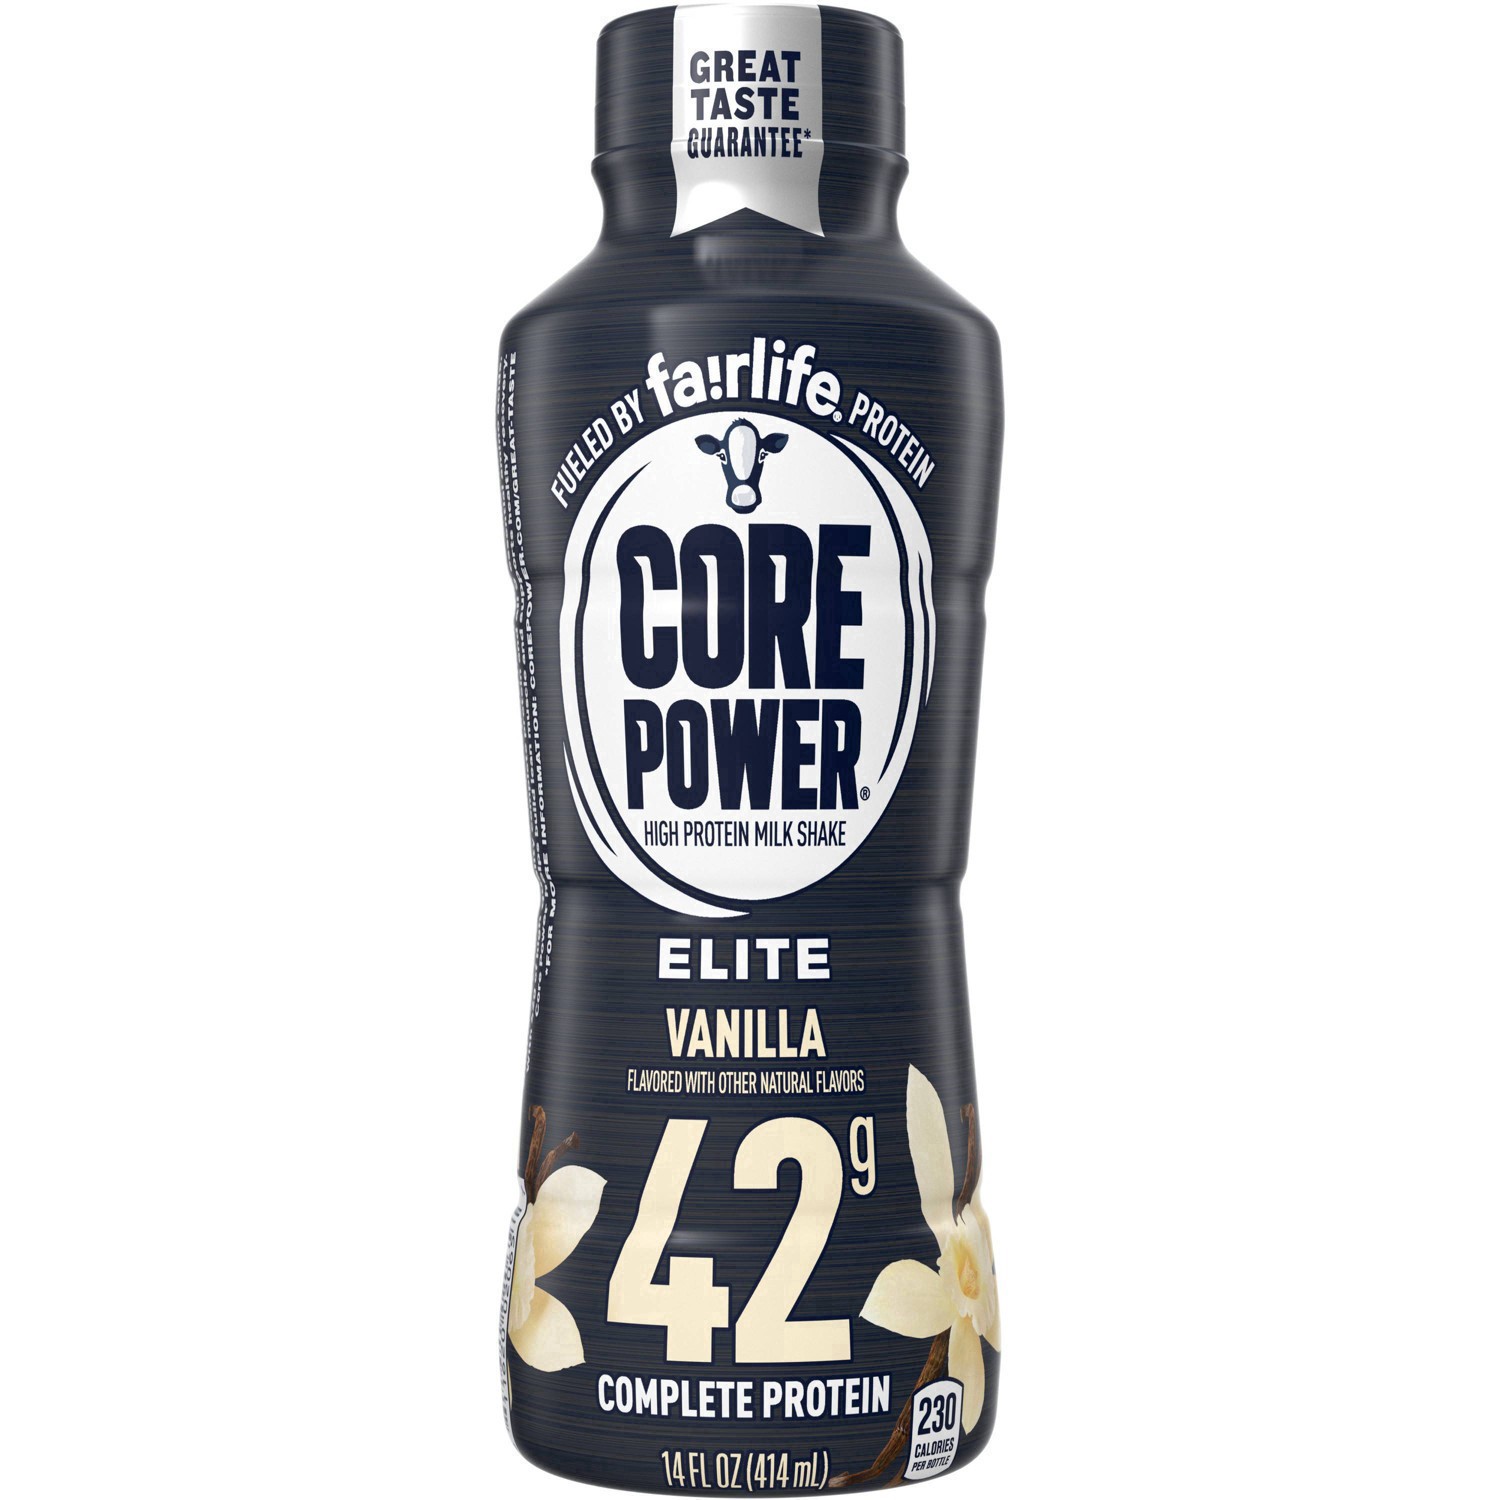 slide 15 of 78, Core Power High Protein Elite Vanilla Milk Shake 14 fl oz, 14 fl oz